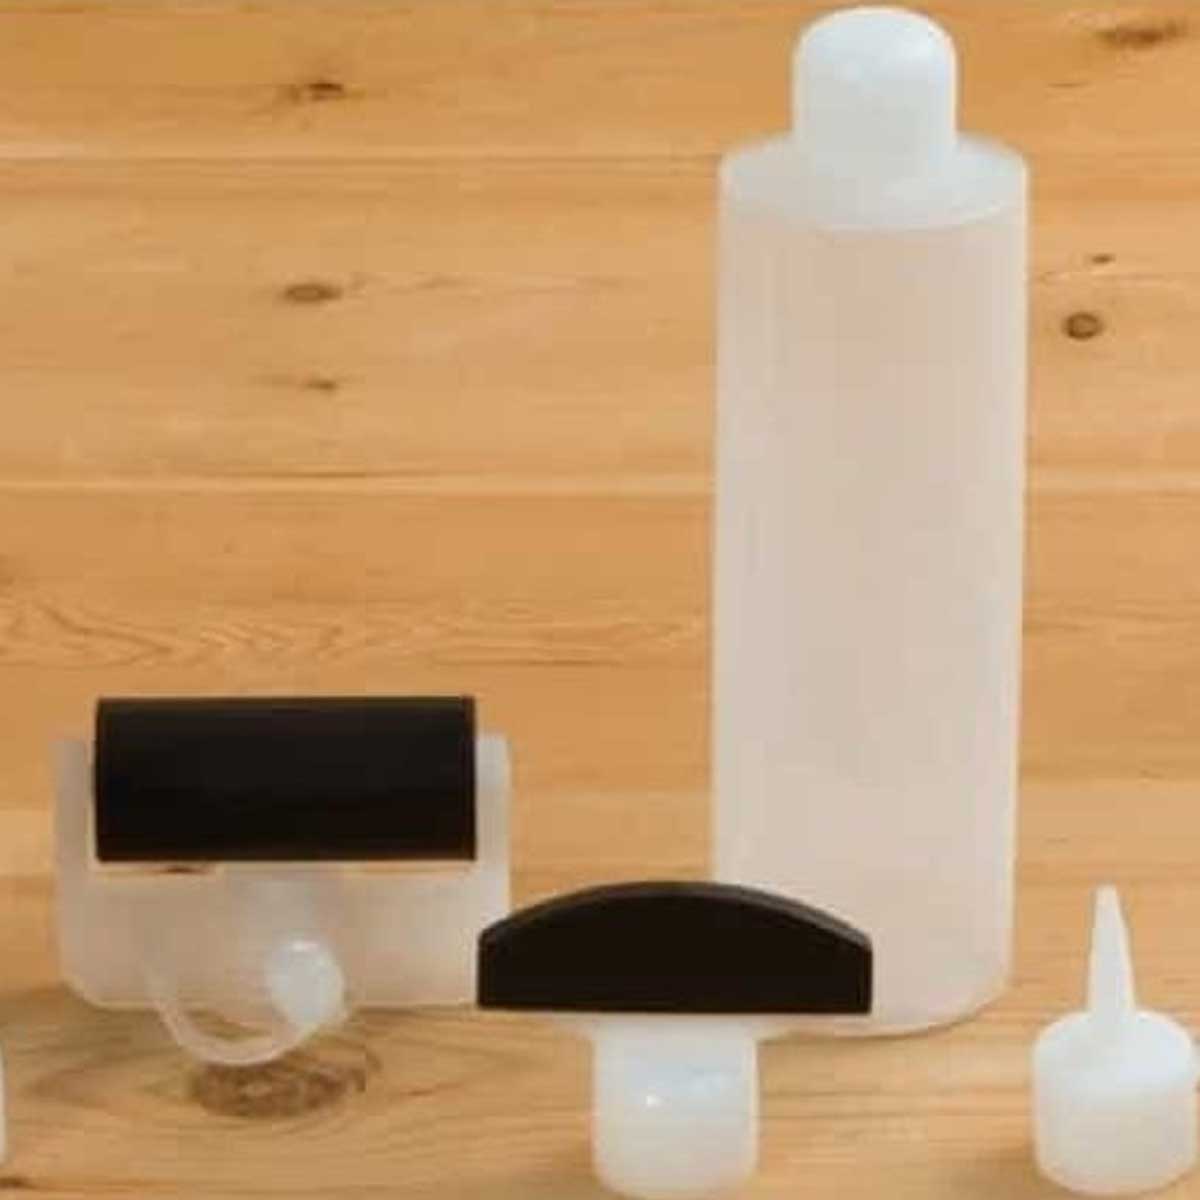 Glue Bottle Applicator Set Manufacturers, Suppliers in Hyderabad